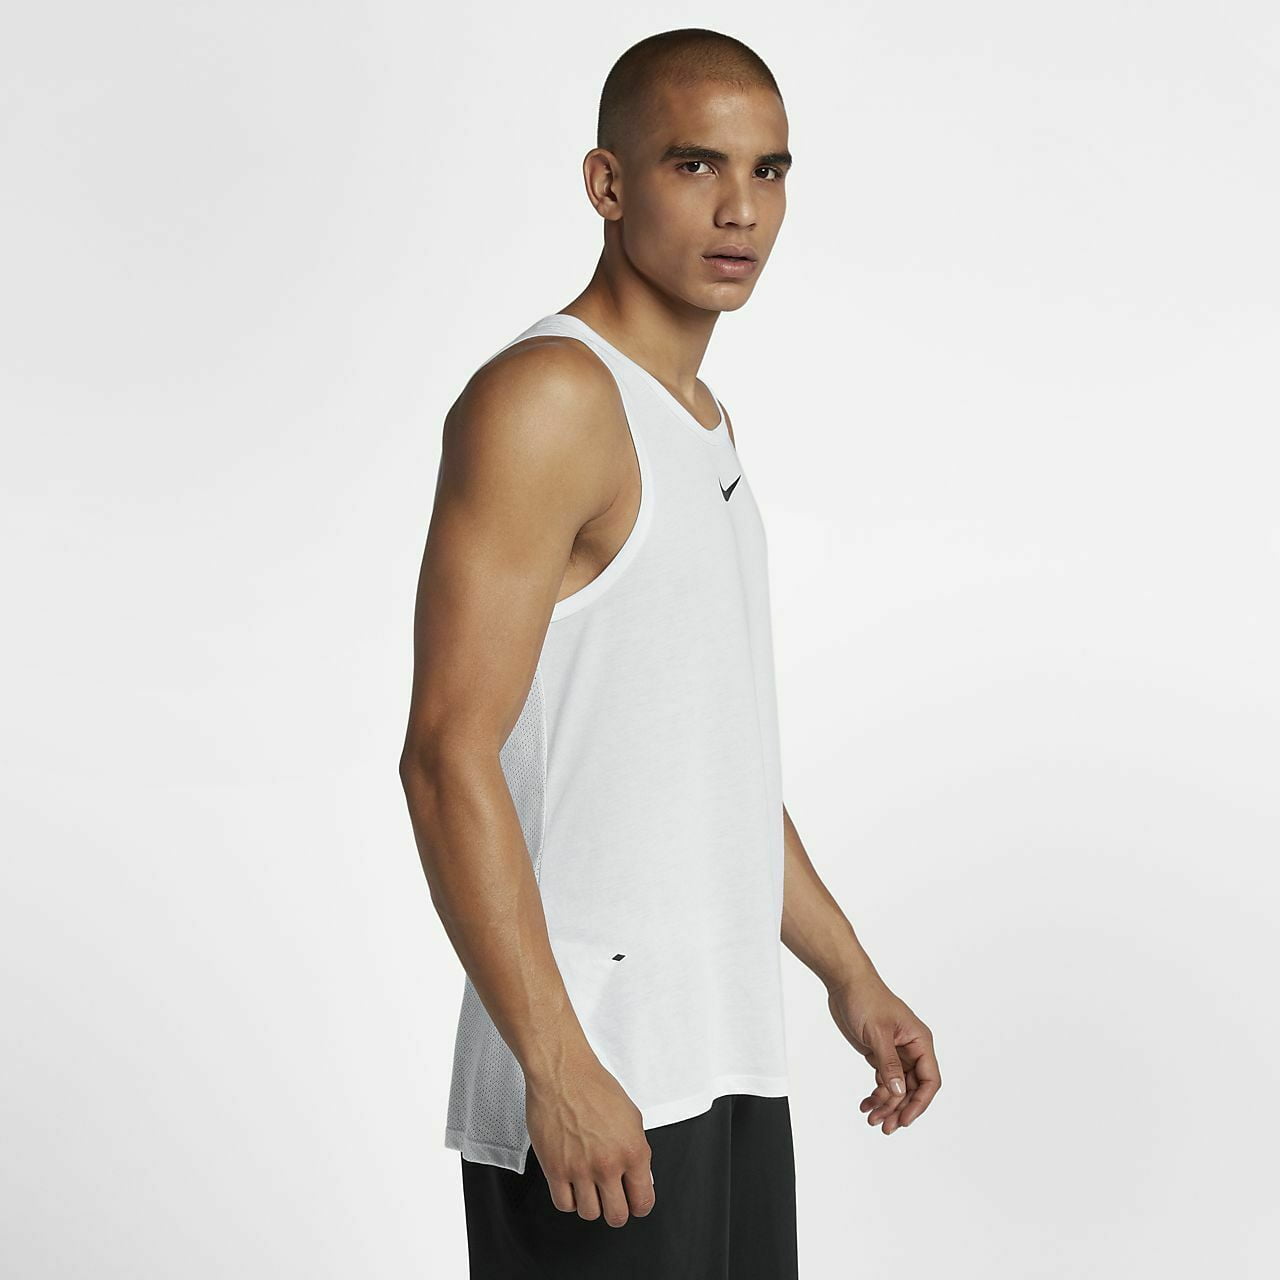 Nike Elite Lightweight Men's Black Basketball Tank Top Size XL 